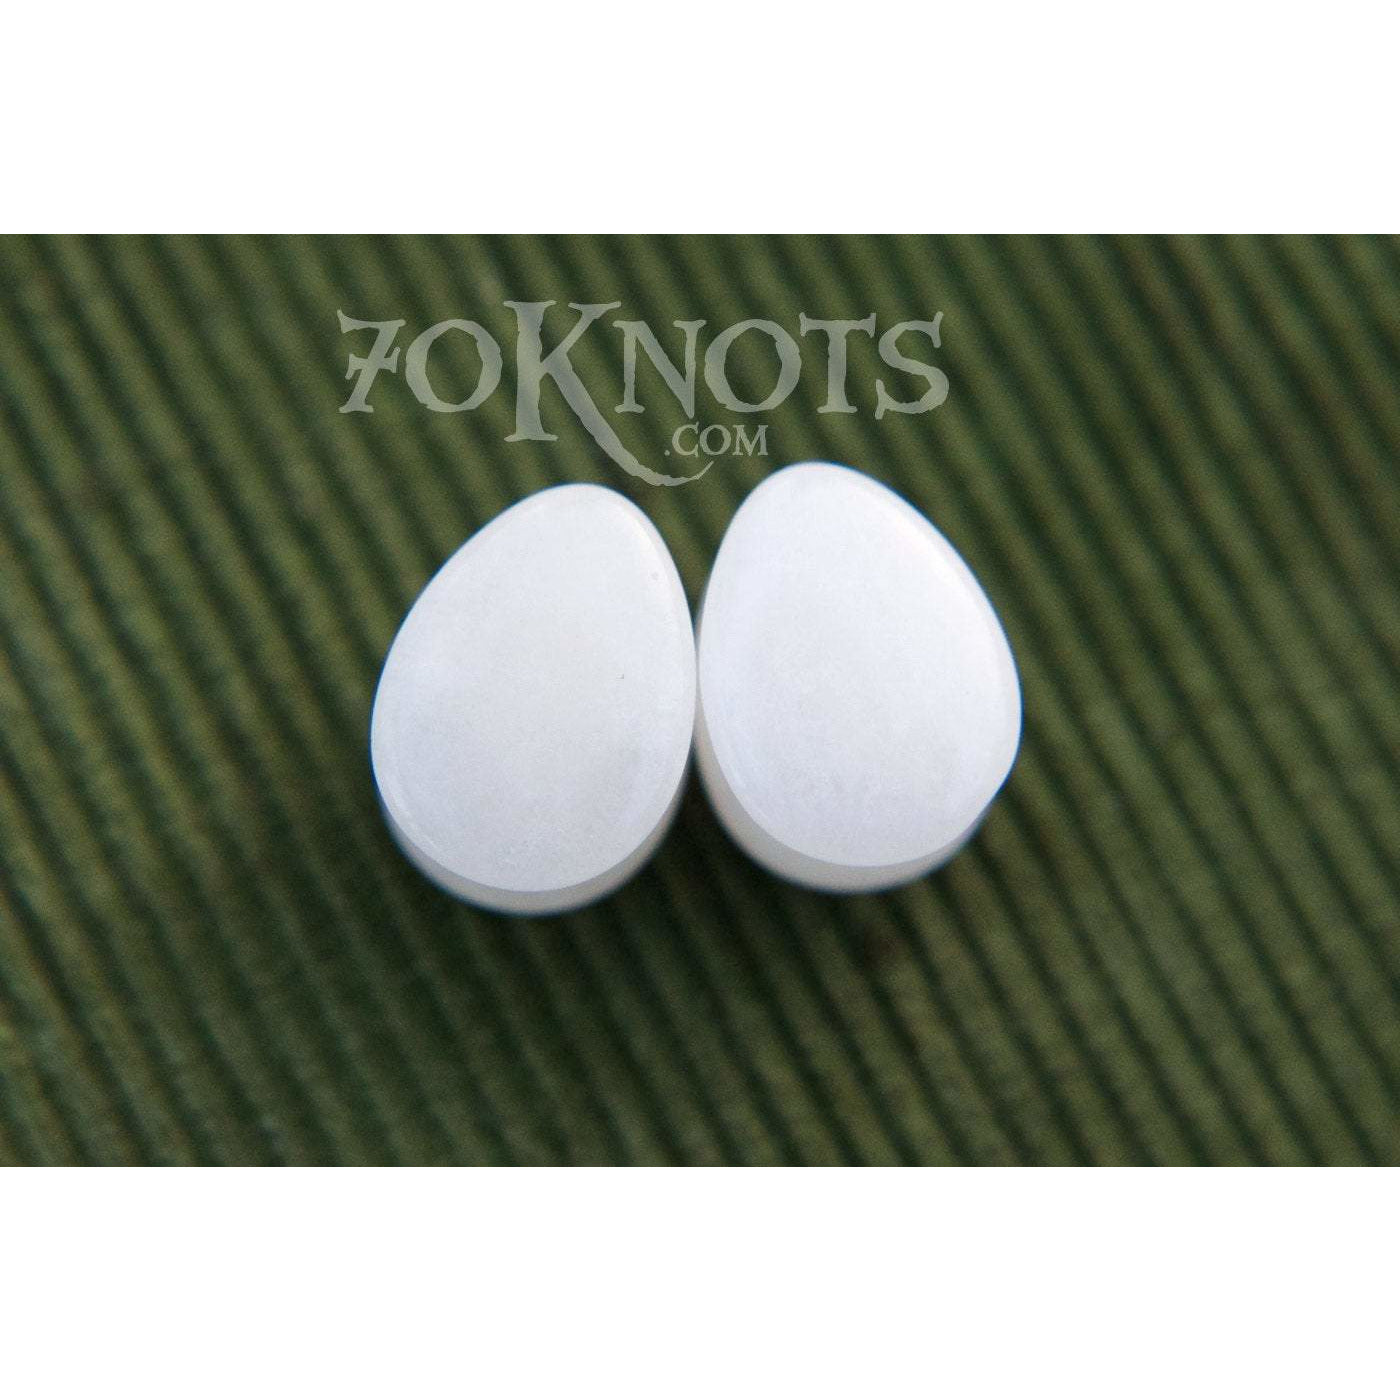 Teardrop White Quartz Plugs, Double Flared Organic - 70 Knots